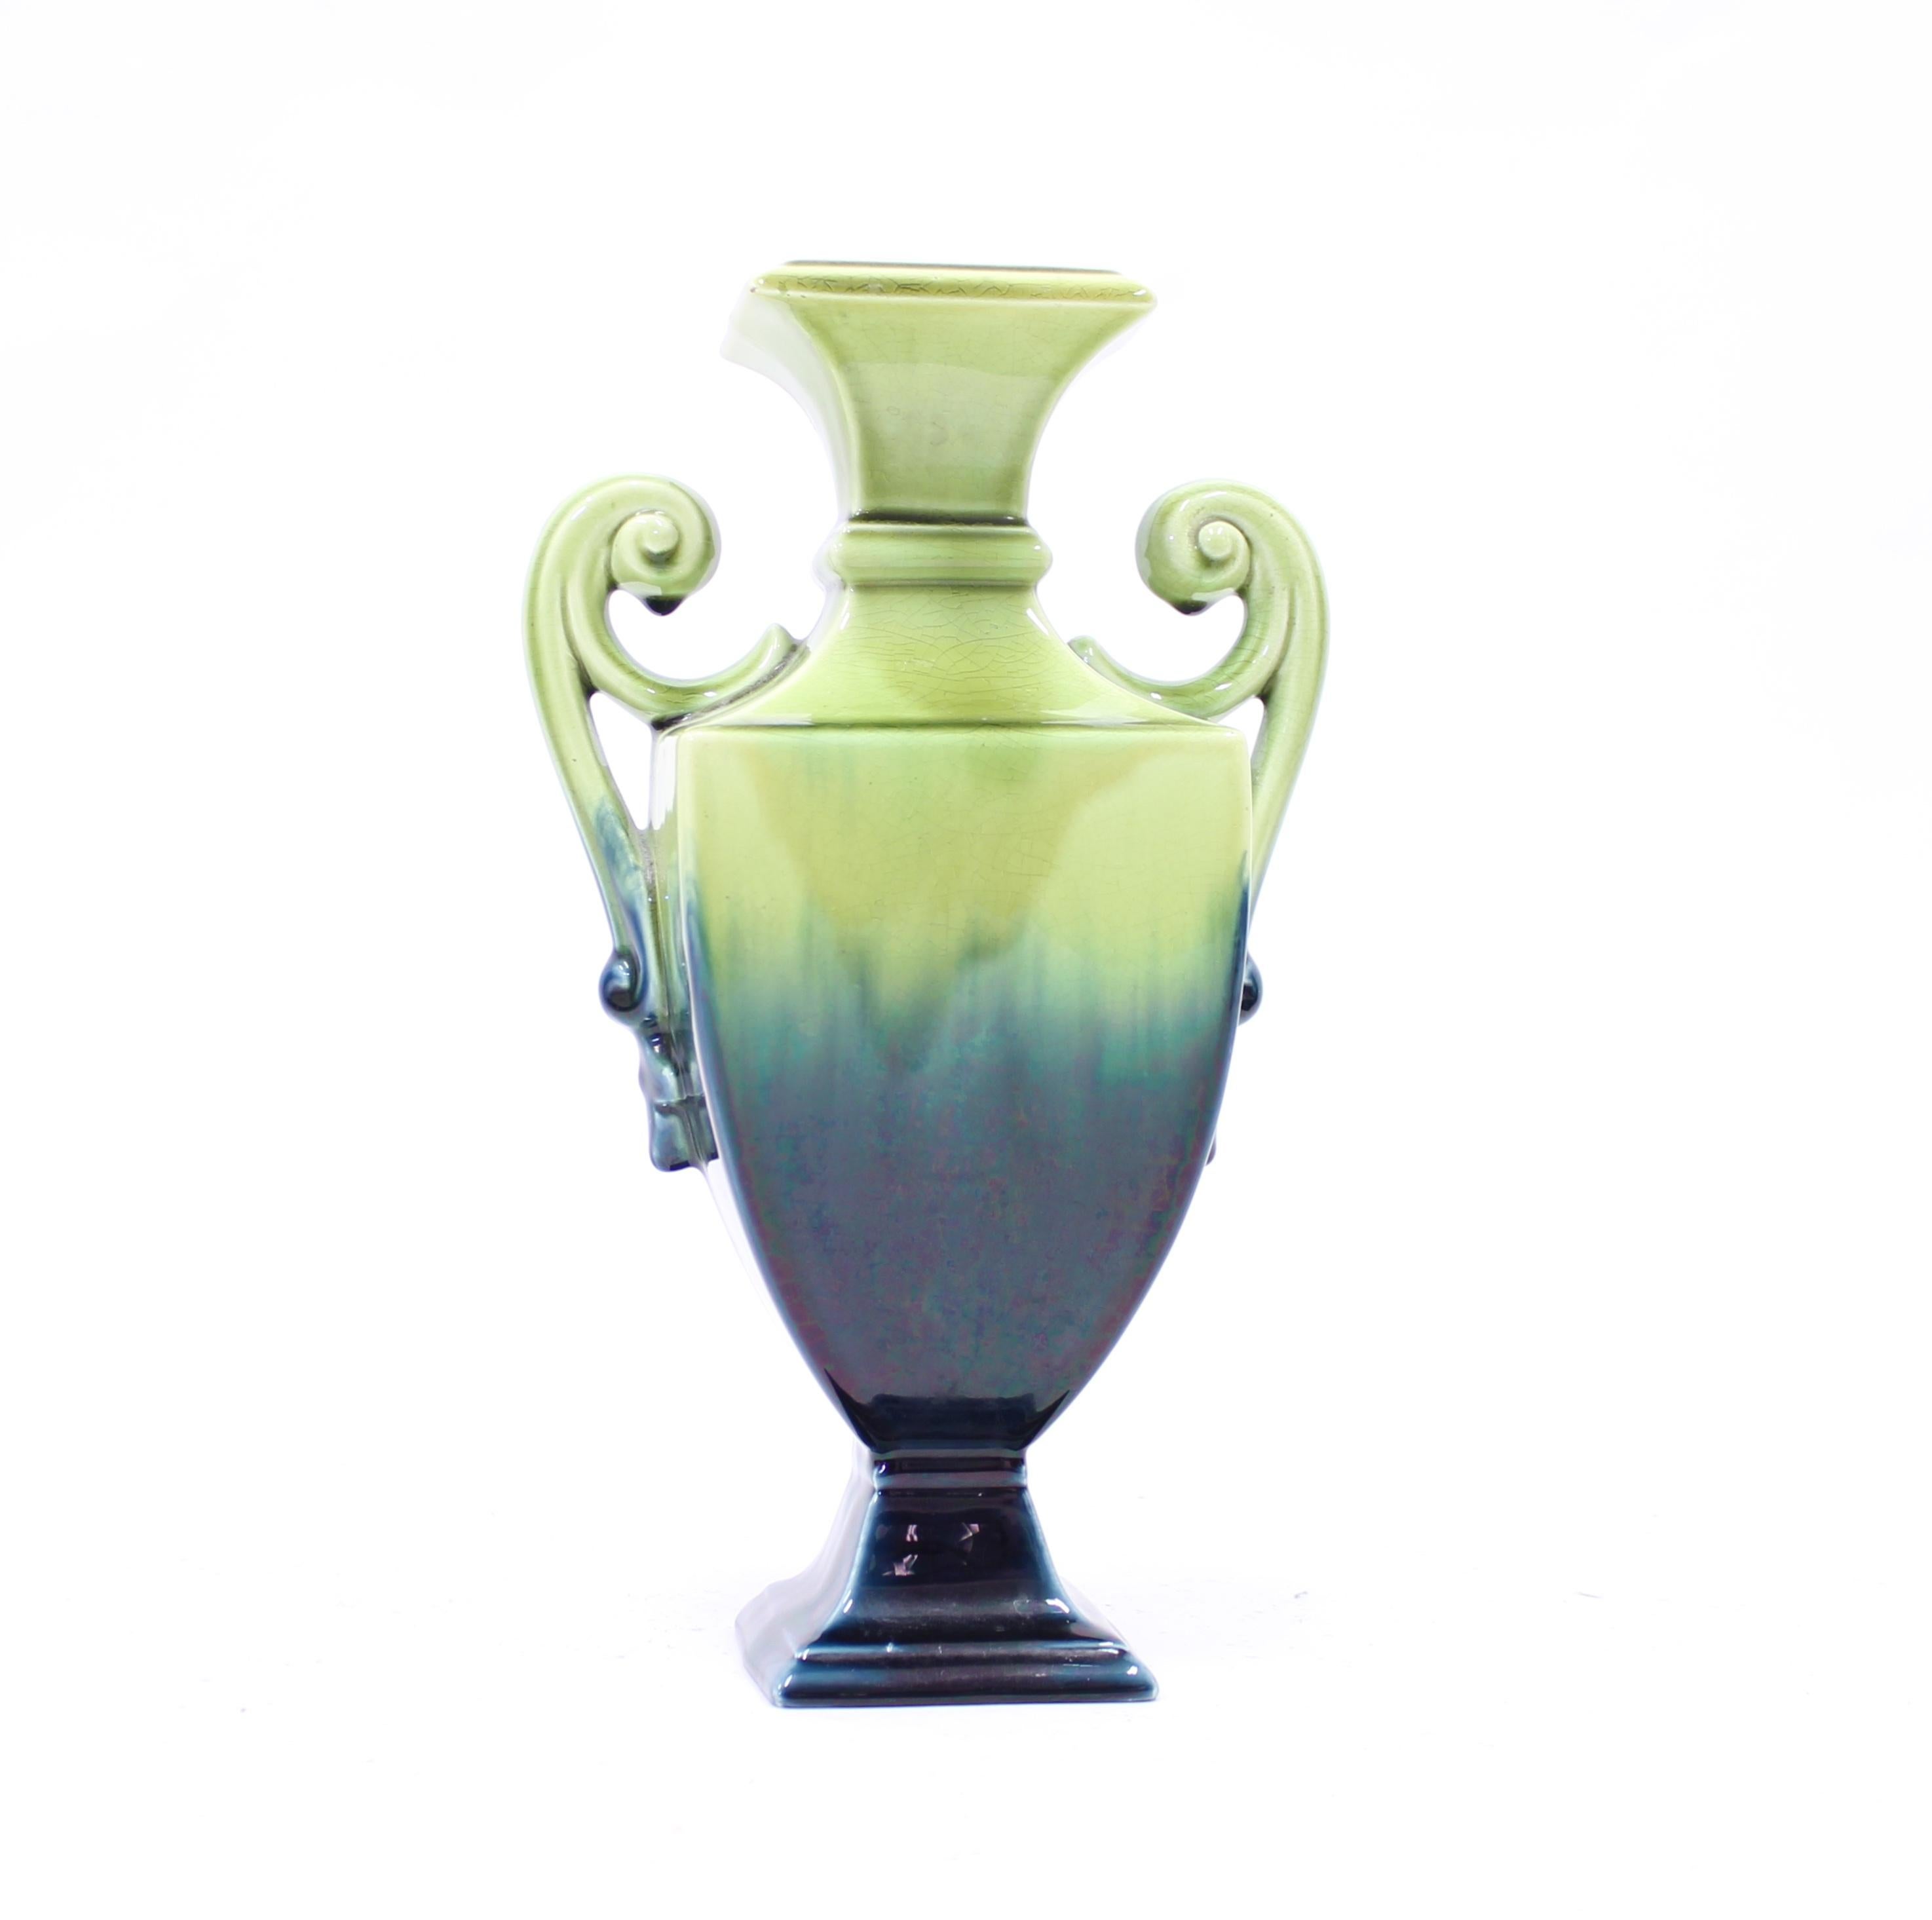 Scandinavian Modern Swedish Art Nouveau Creamware Vase from Rörstrand, 1910s For Sale